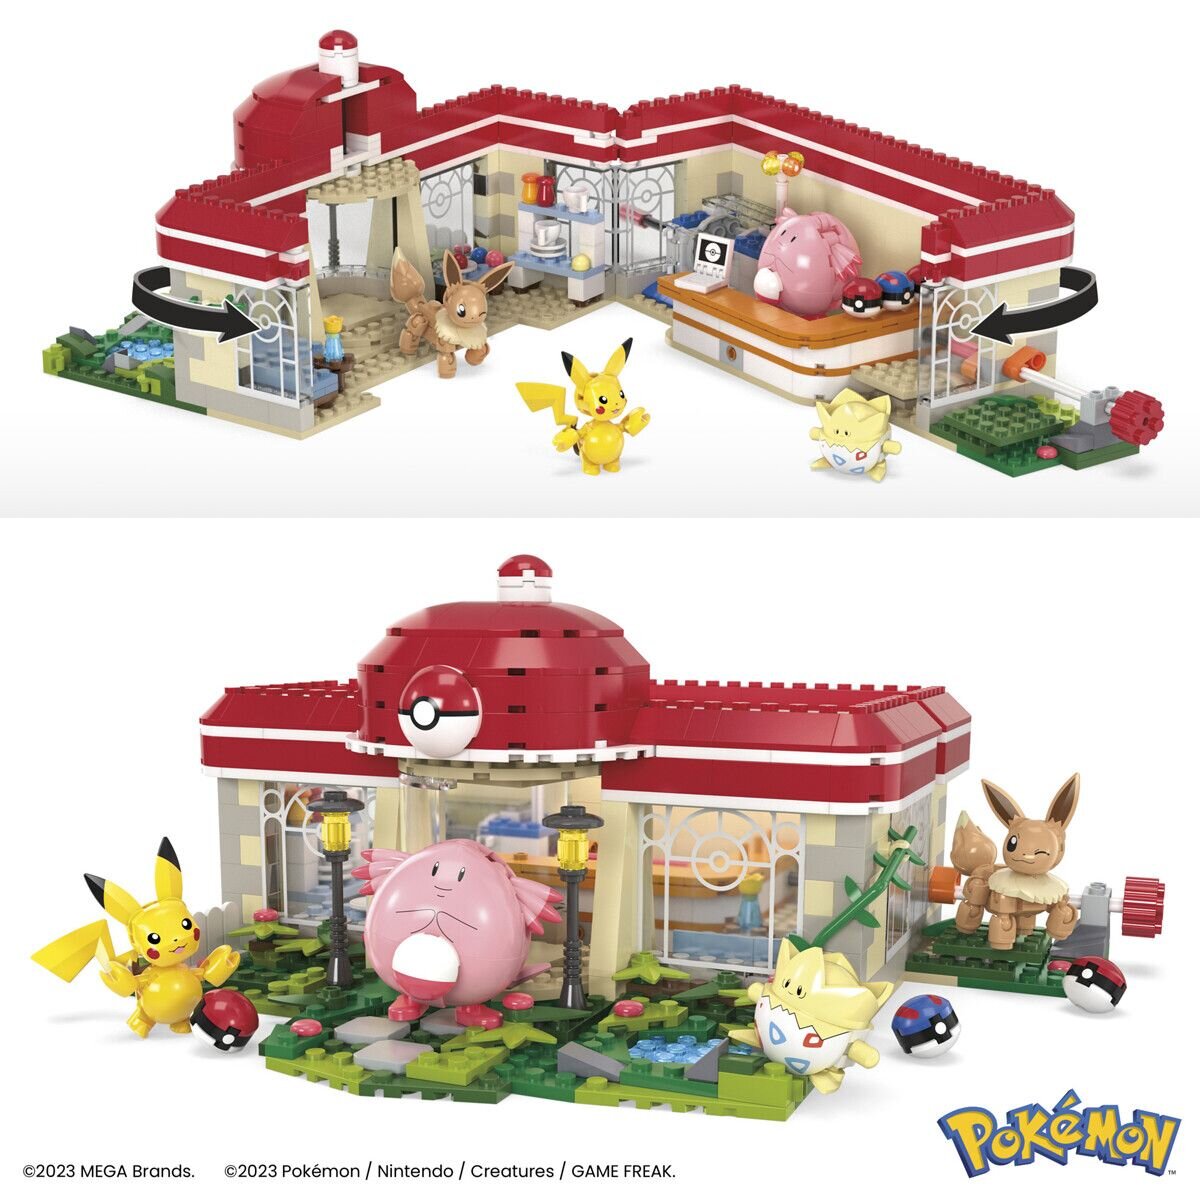 Pokémon - Mega Construction Set Pokémon Center